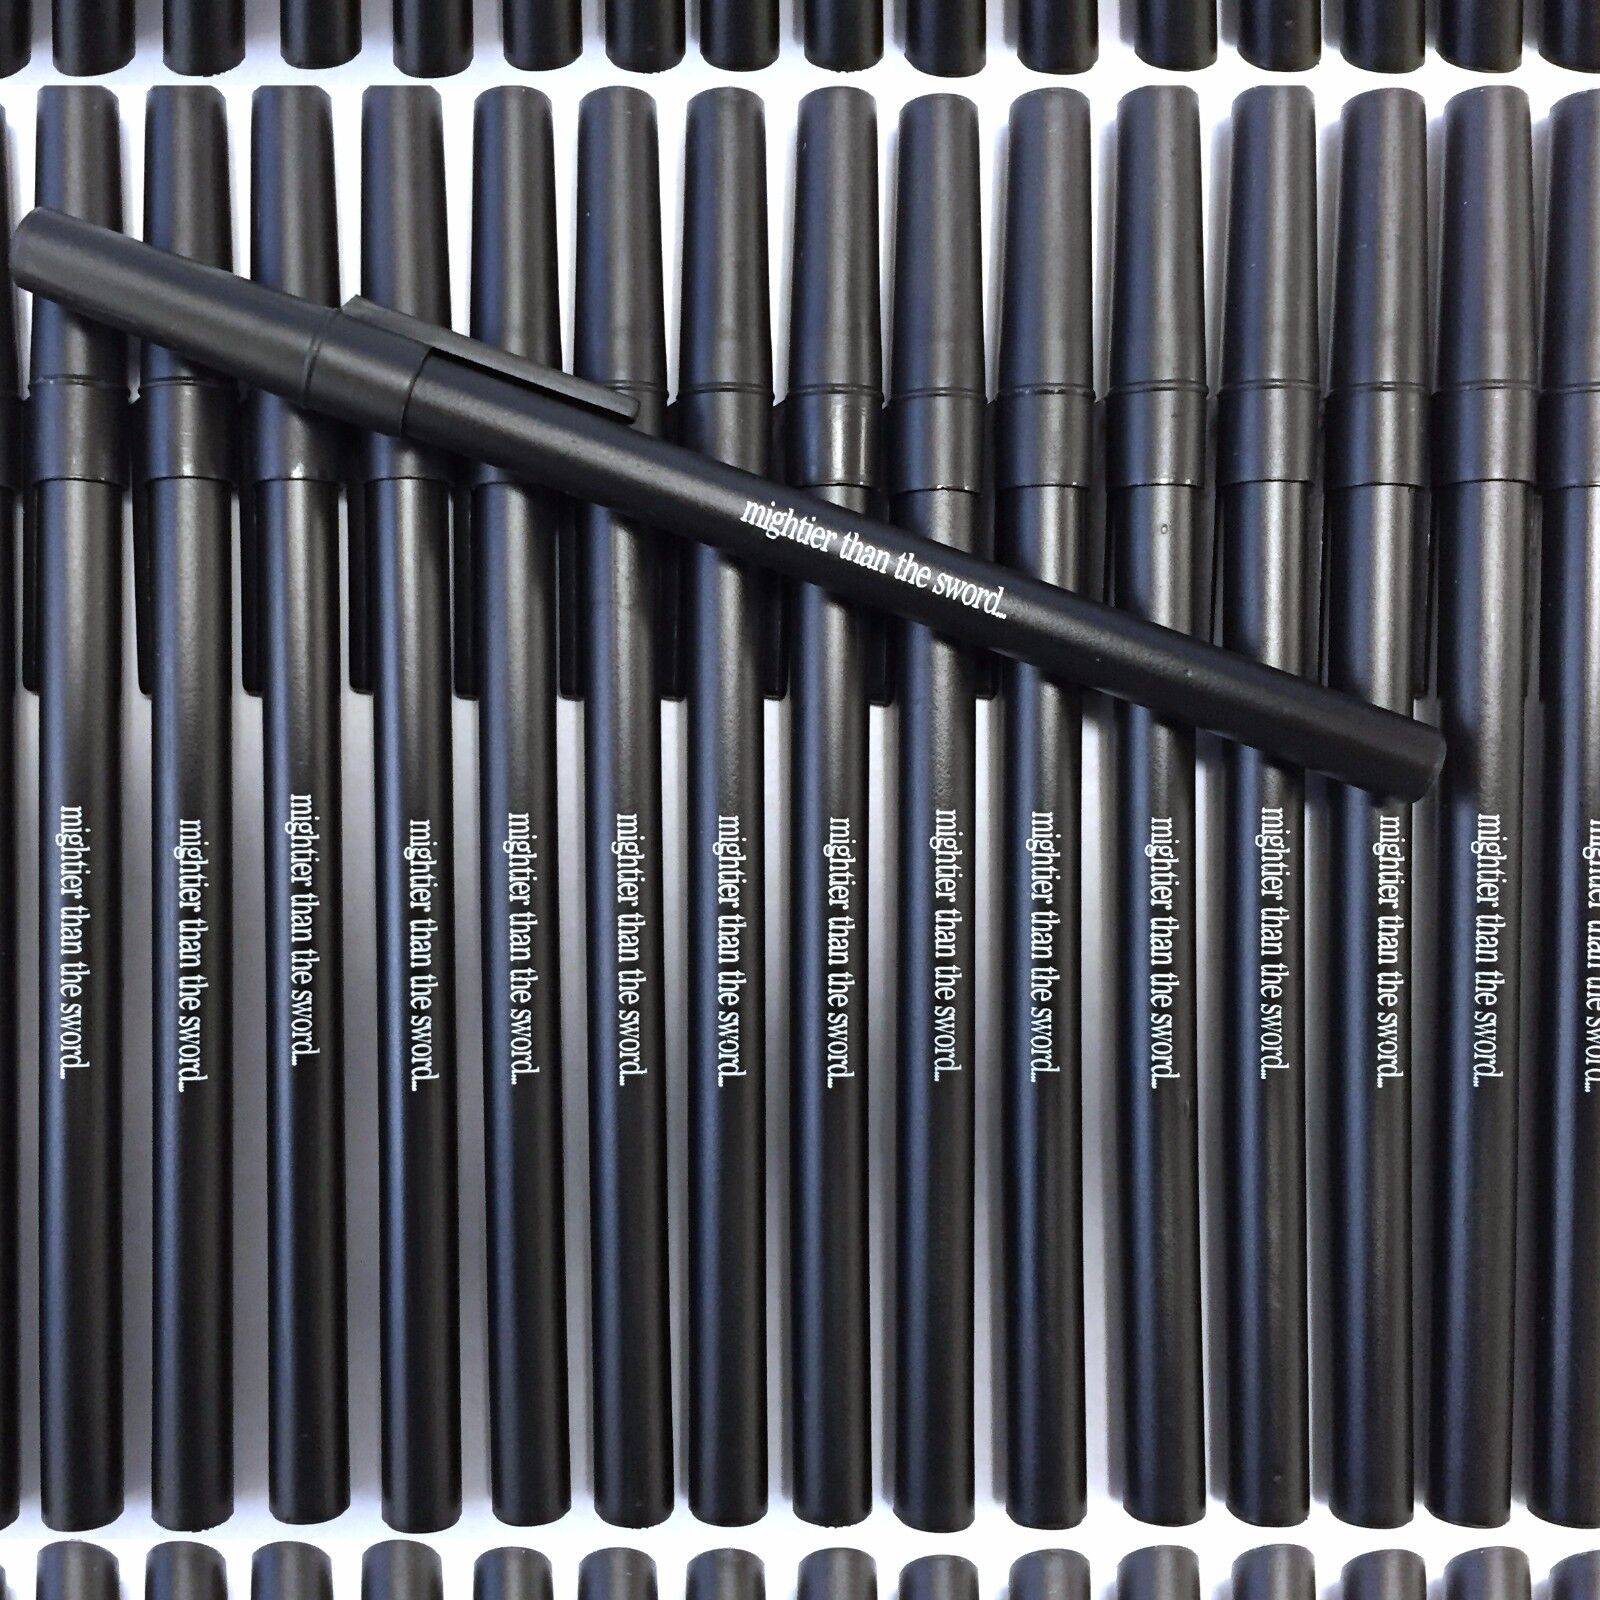 Misprint Pens 200 pc Ball Point Ink Wholesale Lot Bic Round Stic Style Black Cap